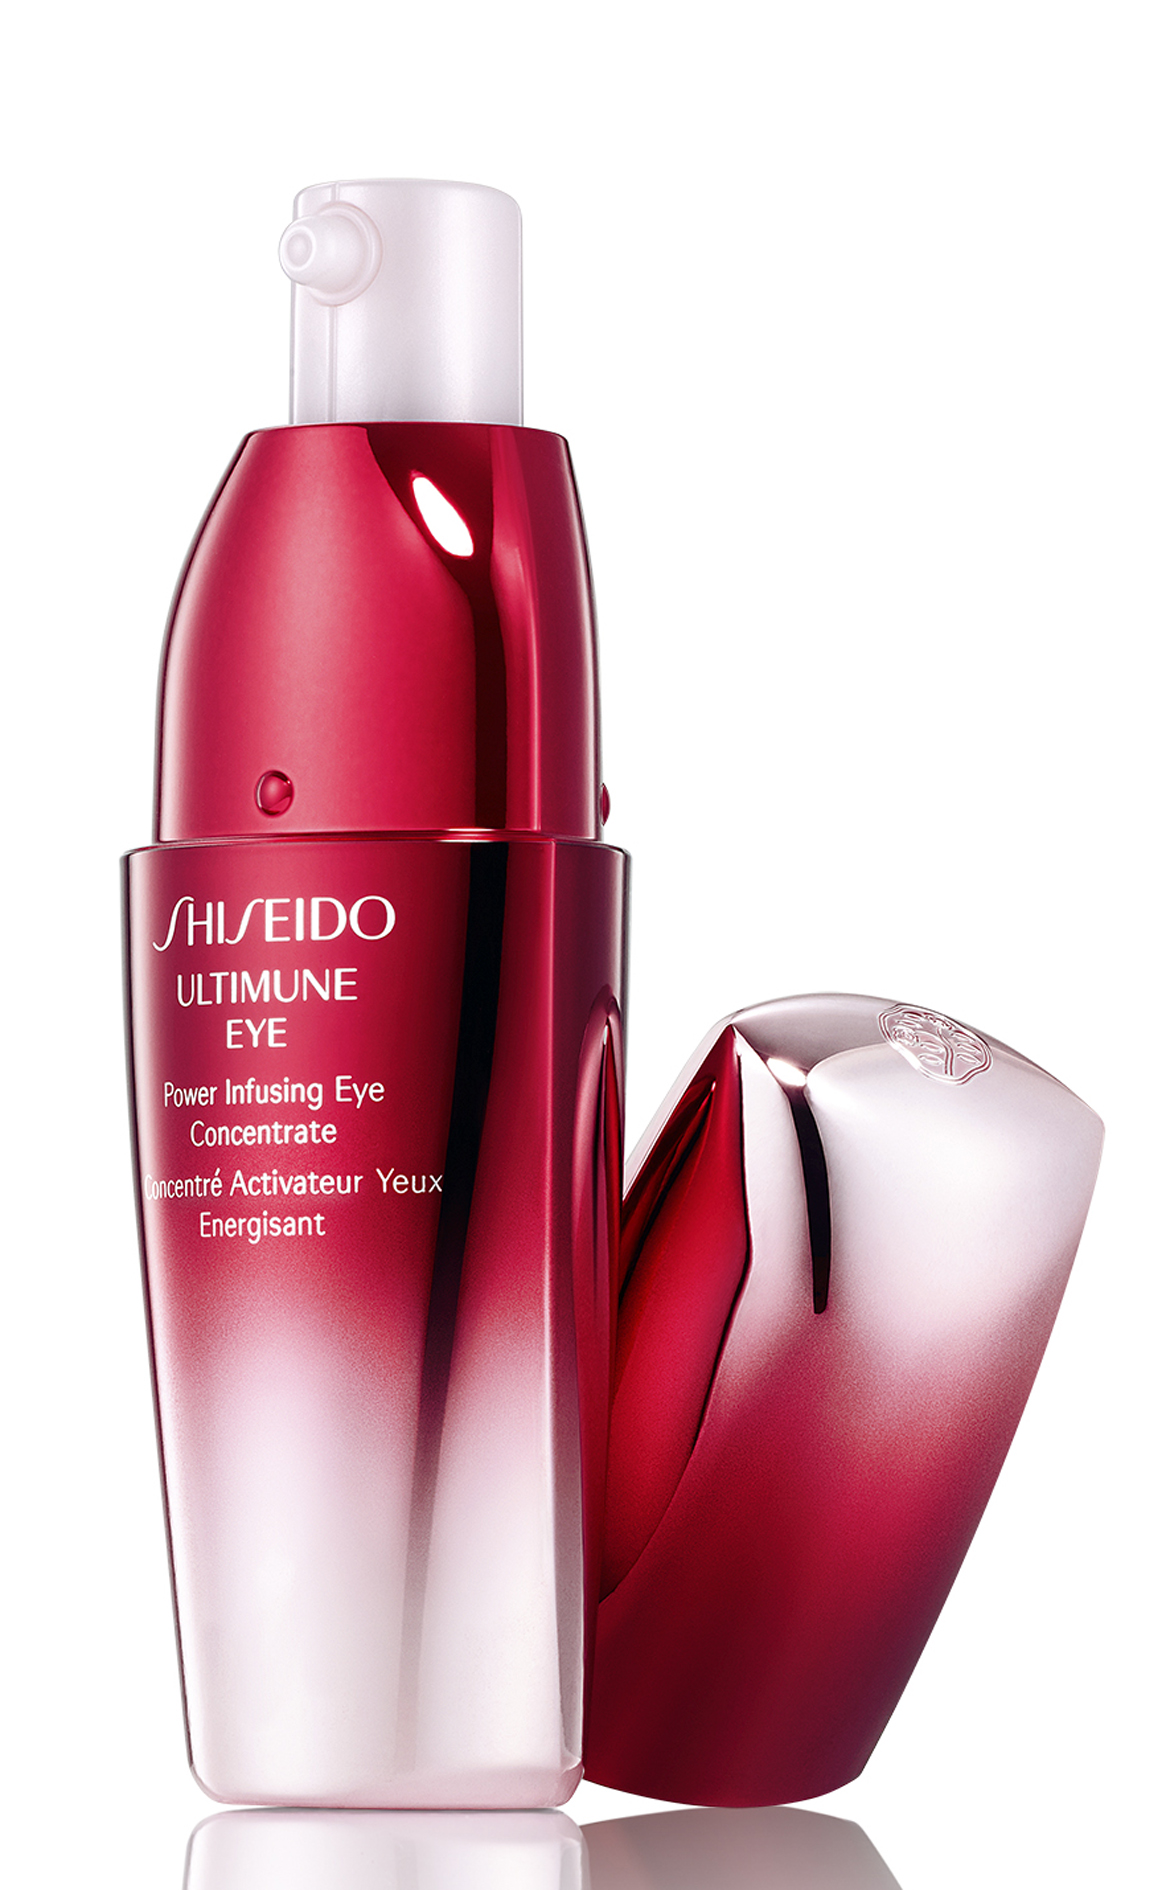 Shiseido de. Shiseido Ultimune Eye Power infusing Eye Concentrate. Ультимьюн шисейдо. Ultimune концентрат шисейдо. Шисейдо лимитированная коллекция.